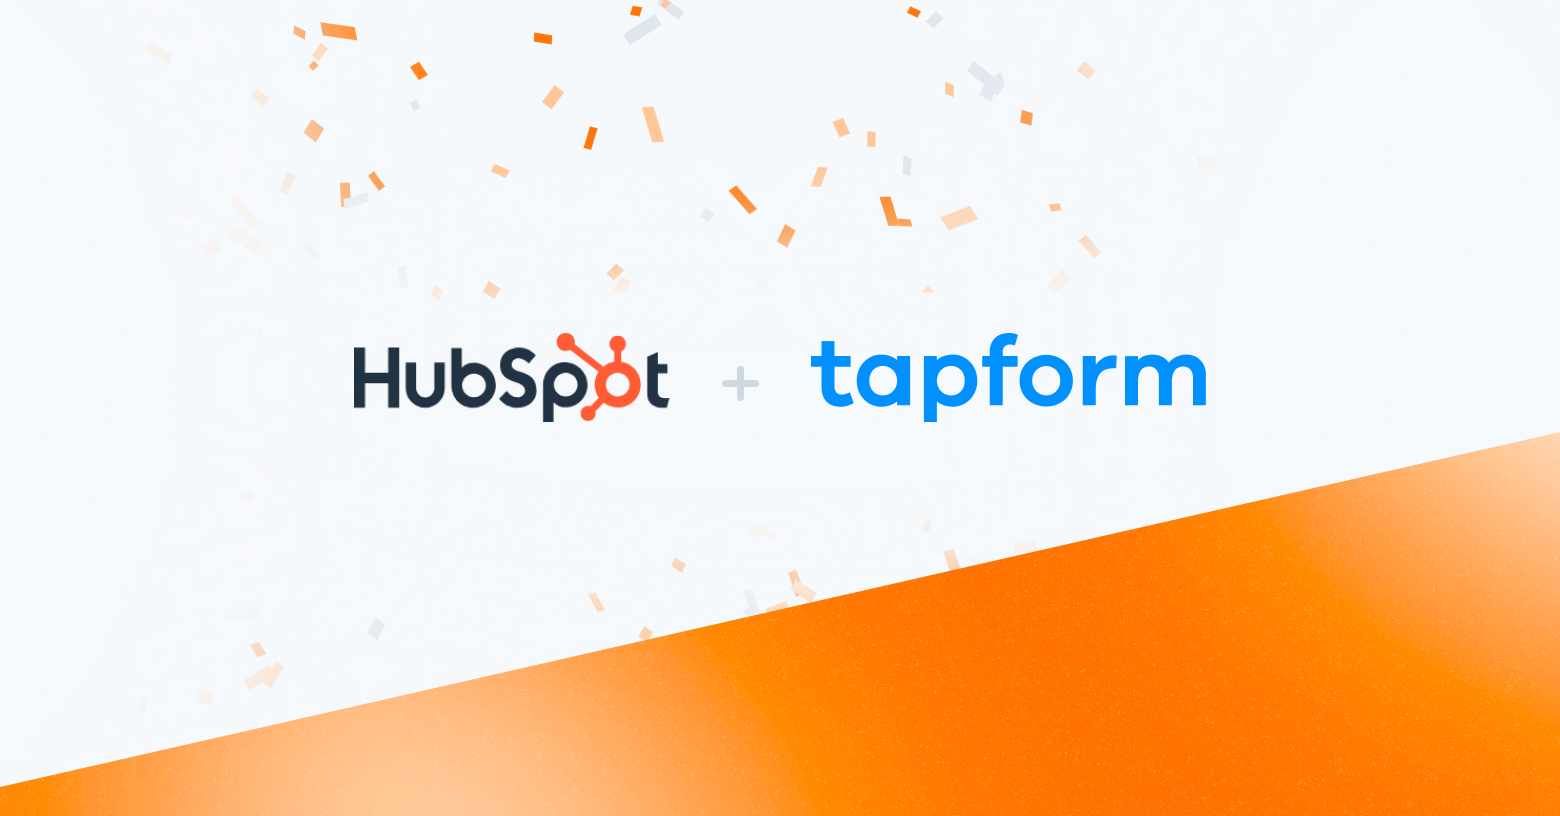 HubSpot Logo featured alongside Tapform Logo